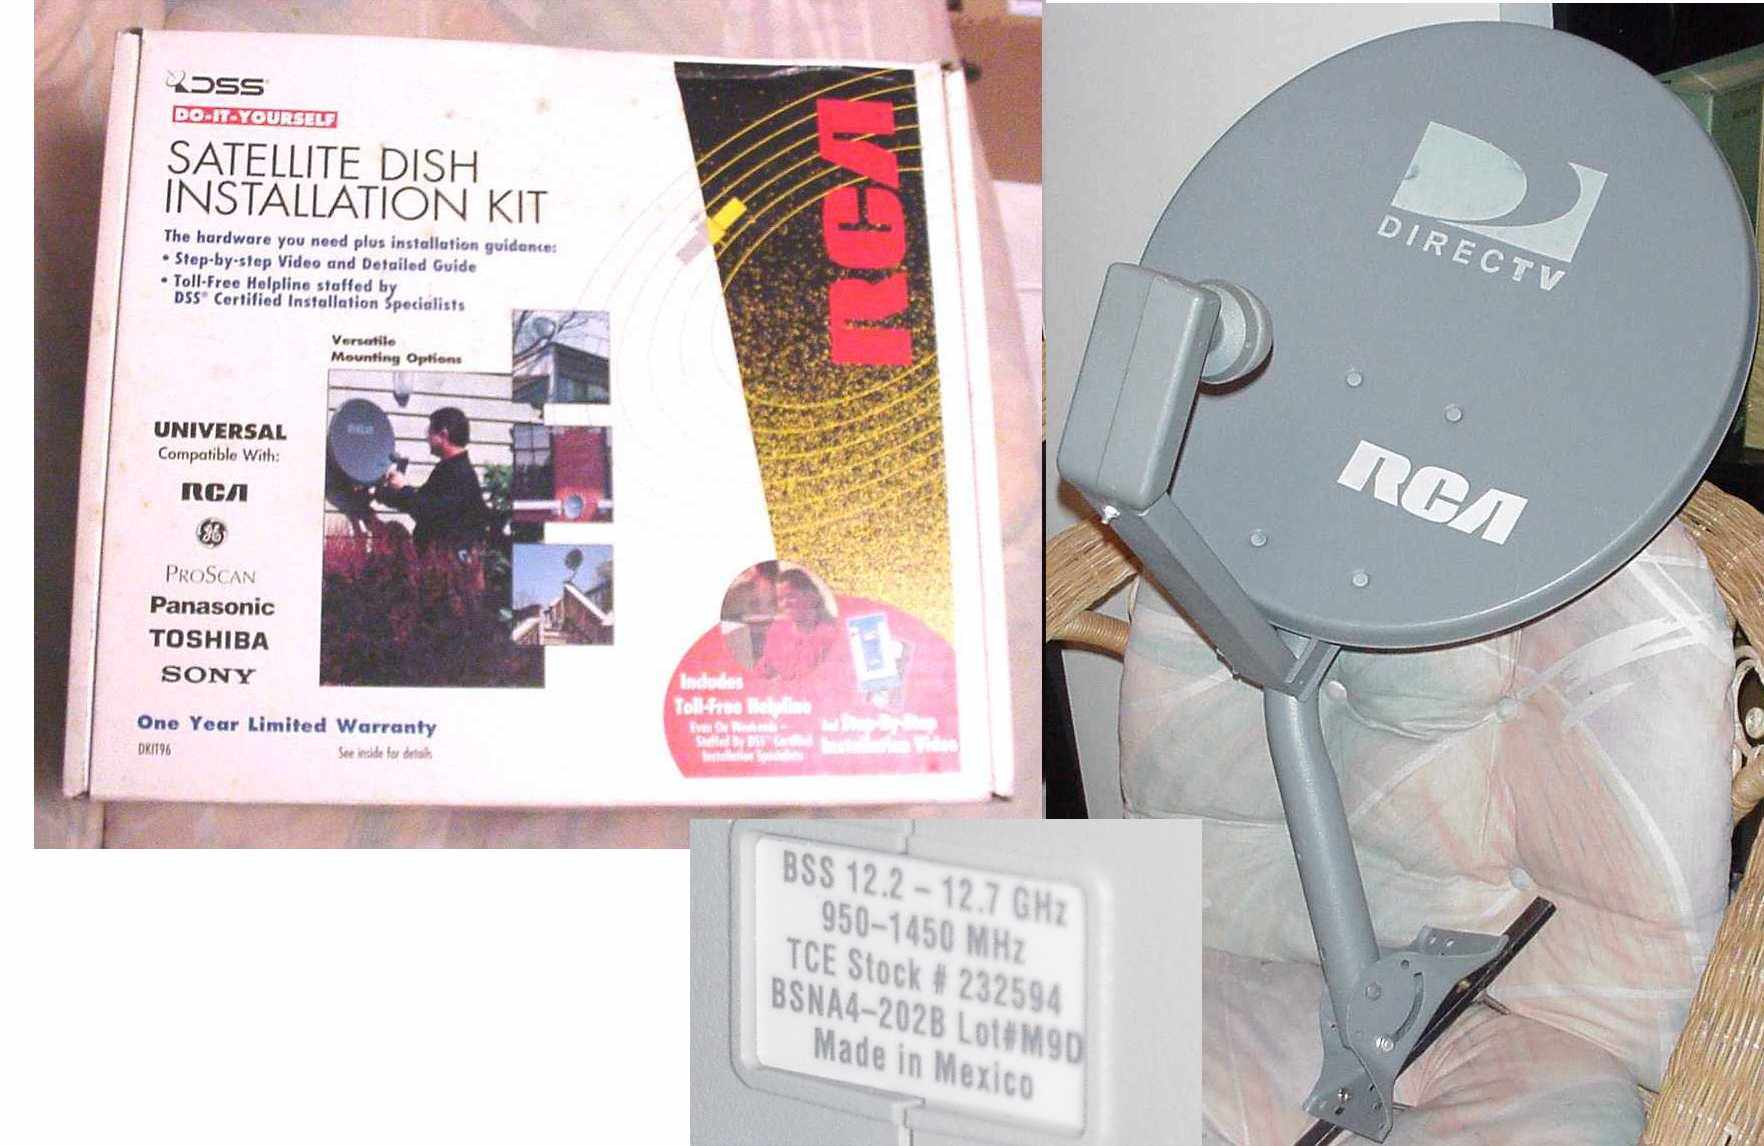 Satellite dish TCE stock no.232594 W/Install kit 